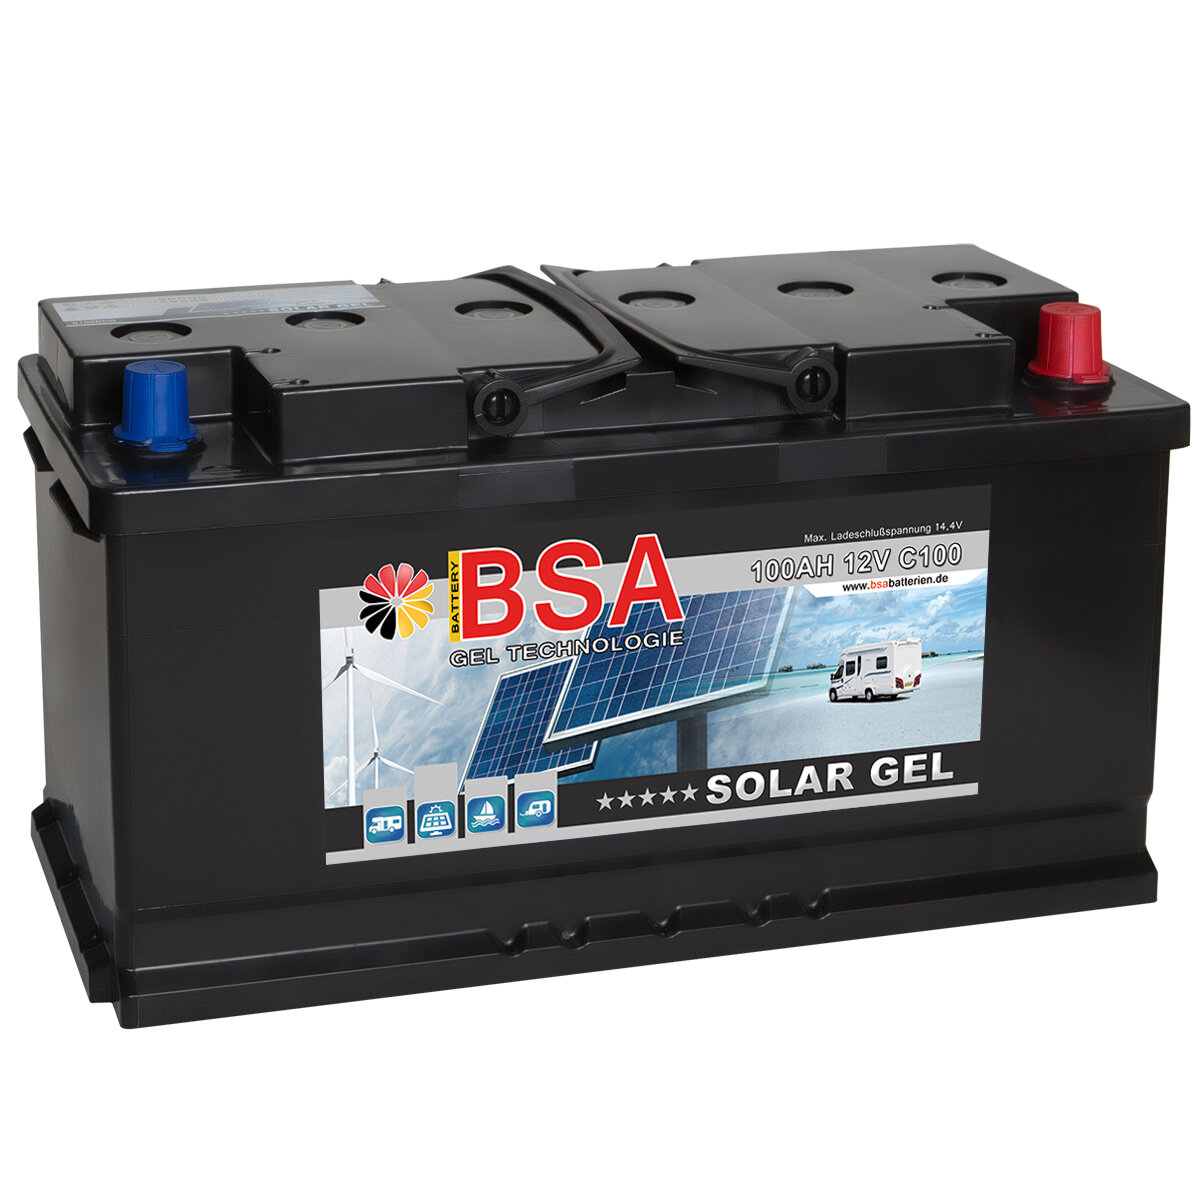 BSA Solarbatterie Gel 100Ah 12V, 176,90 €